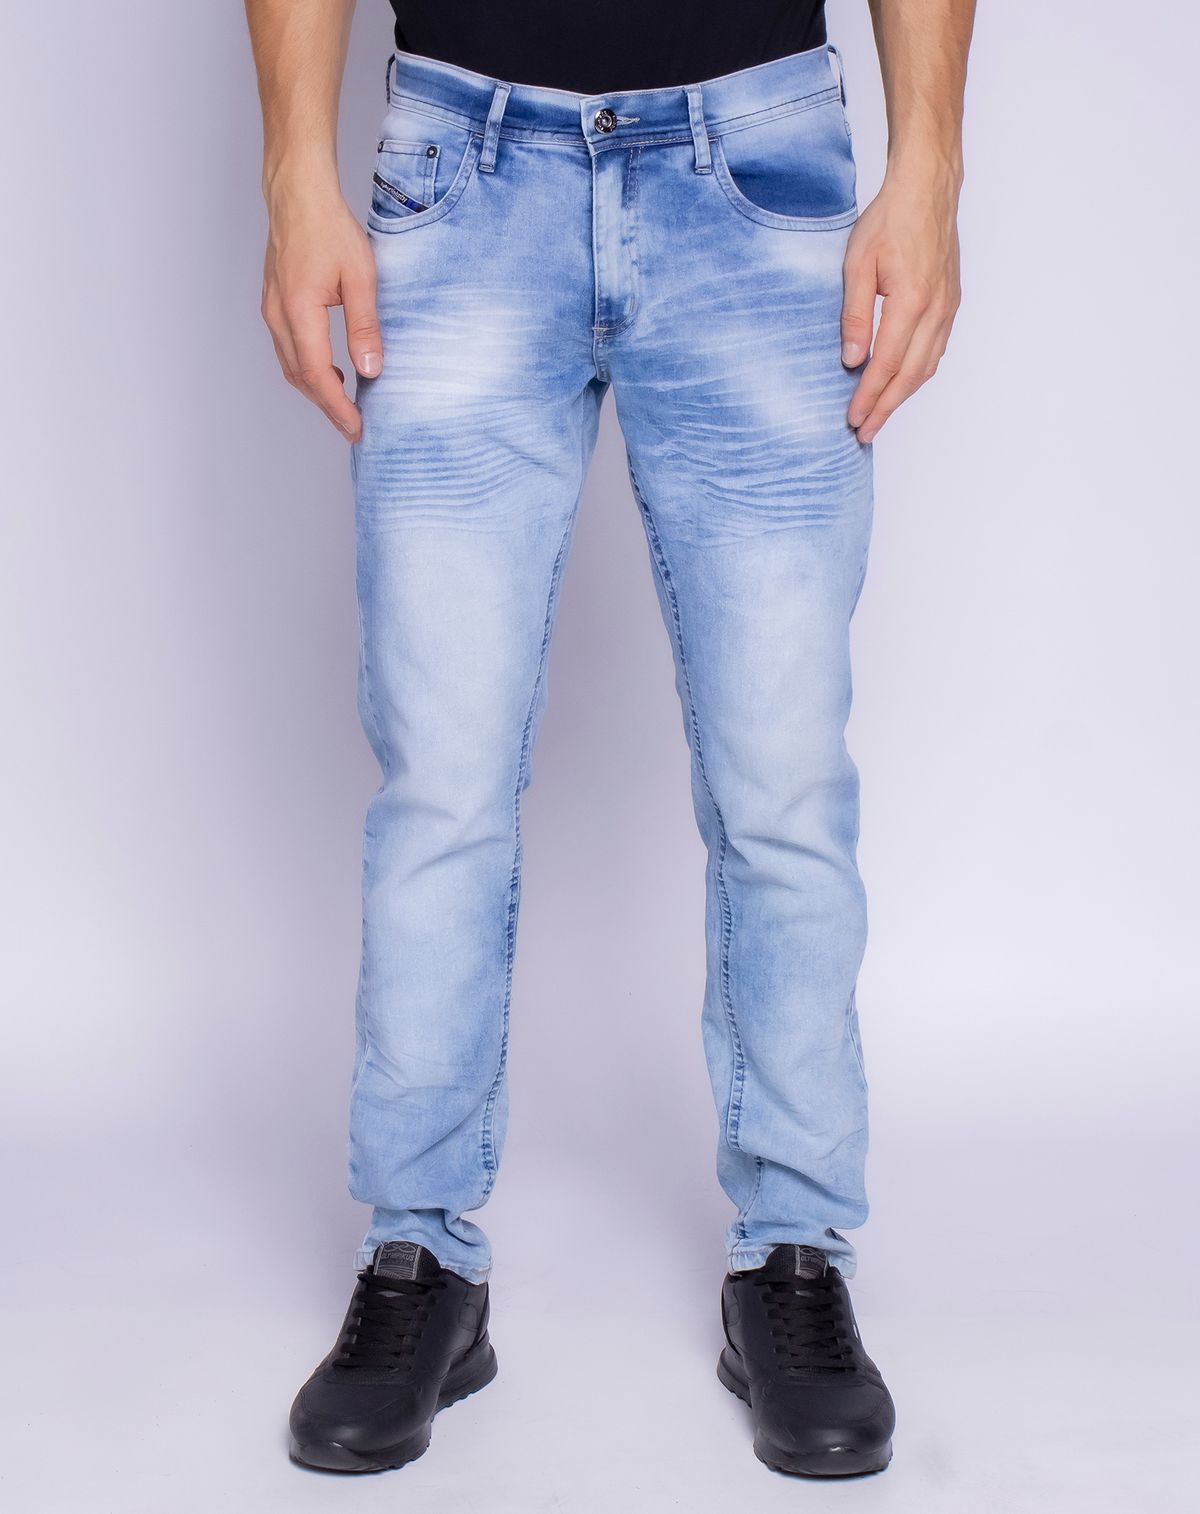 616140004-calca-jeans-skinny-masculina-estonada-nervuras-jeans-44-1c6